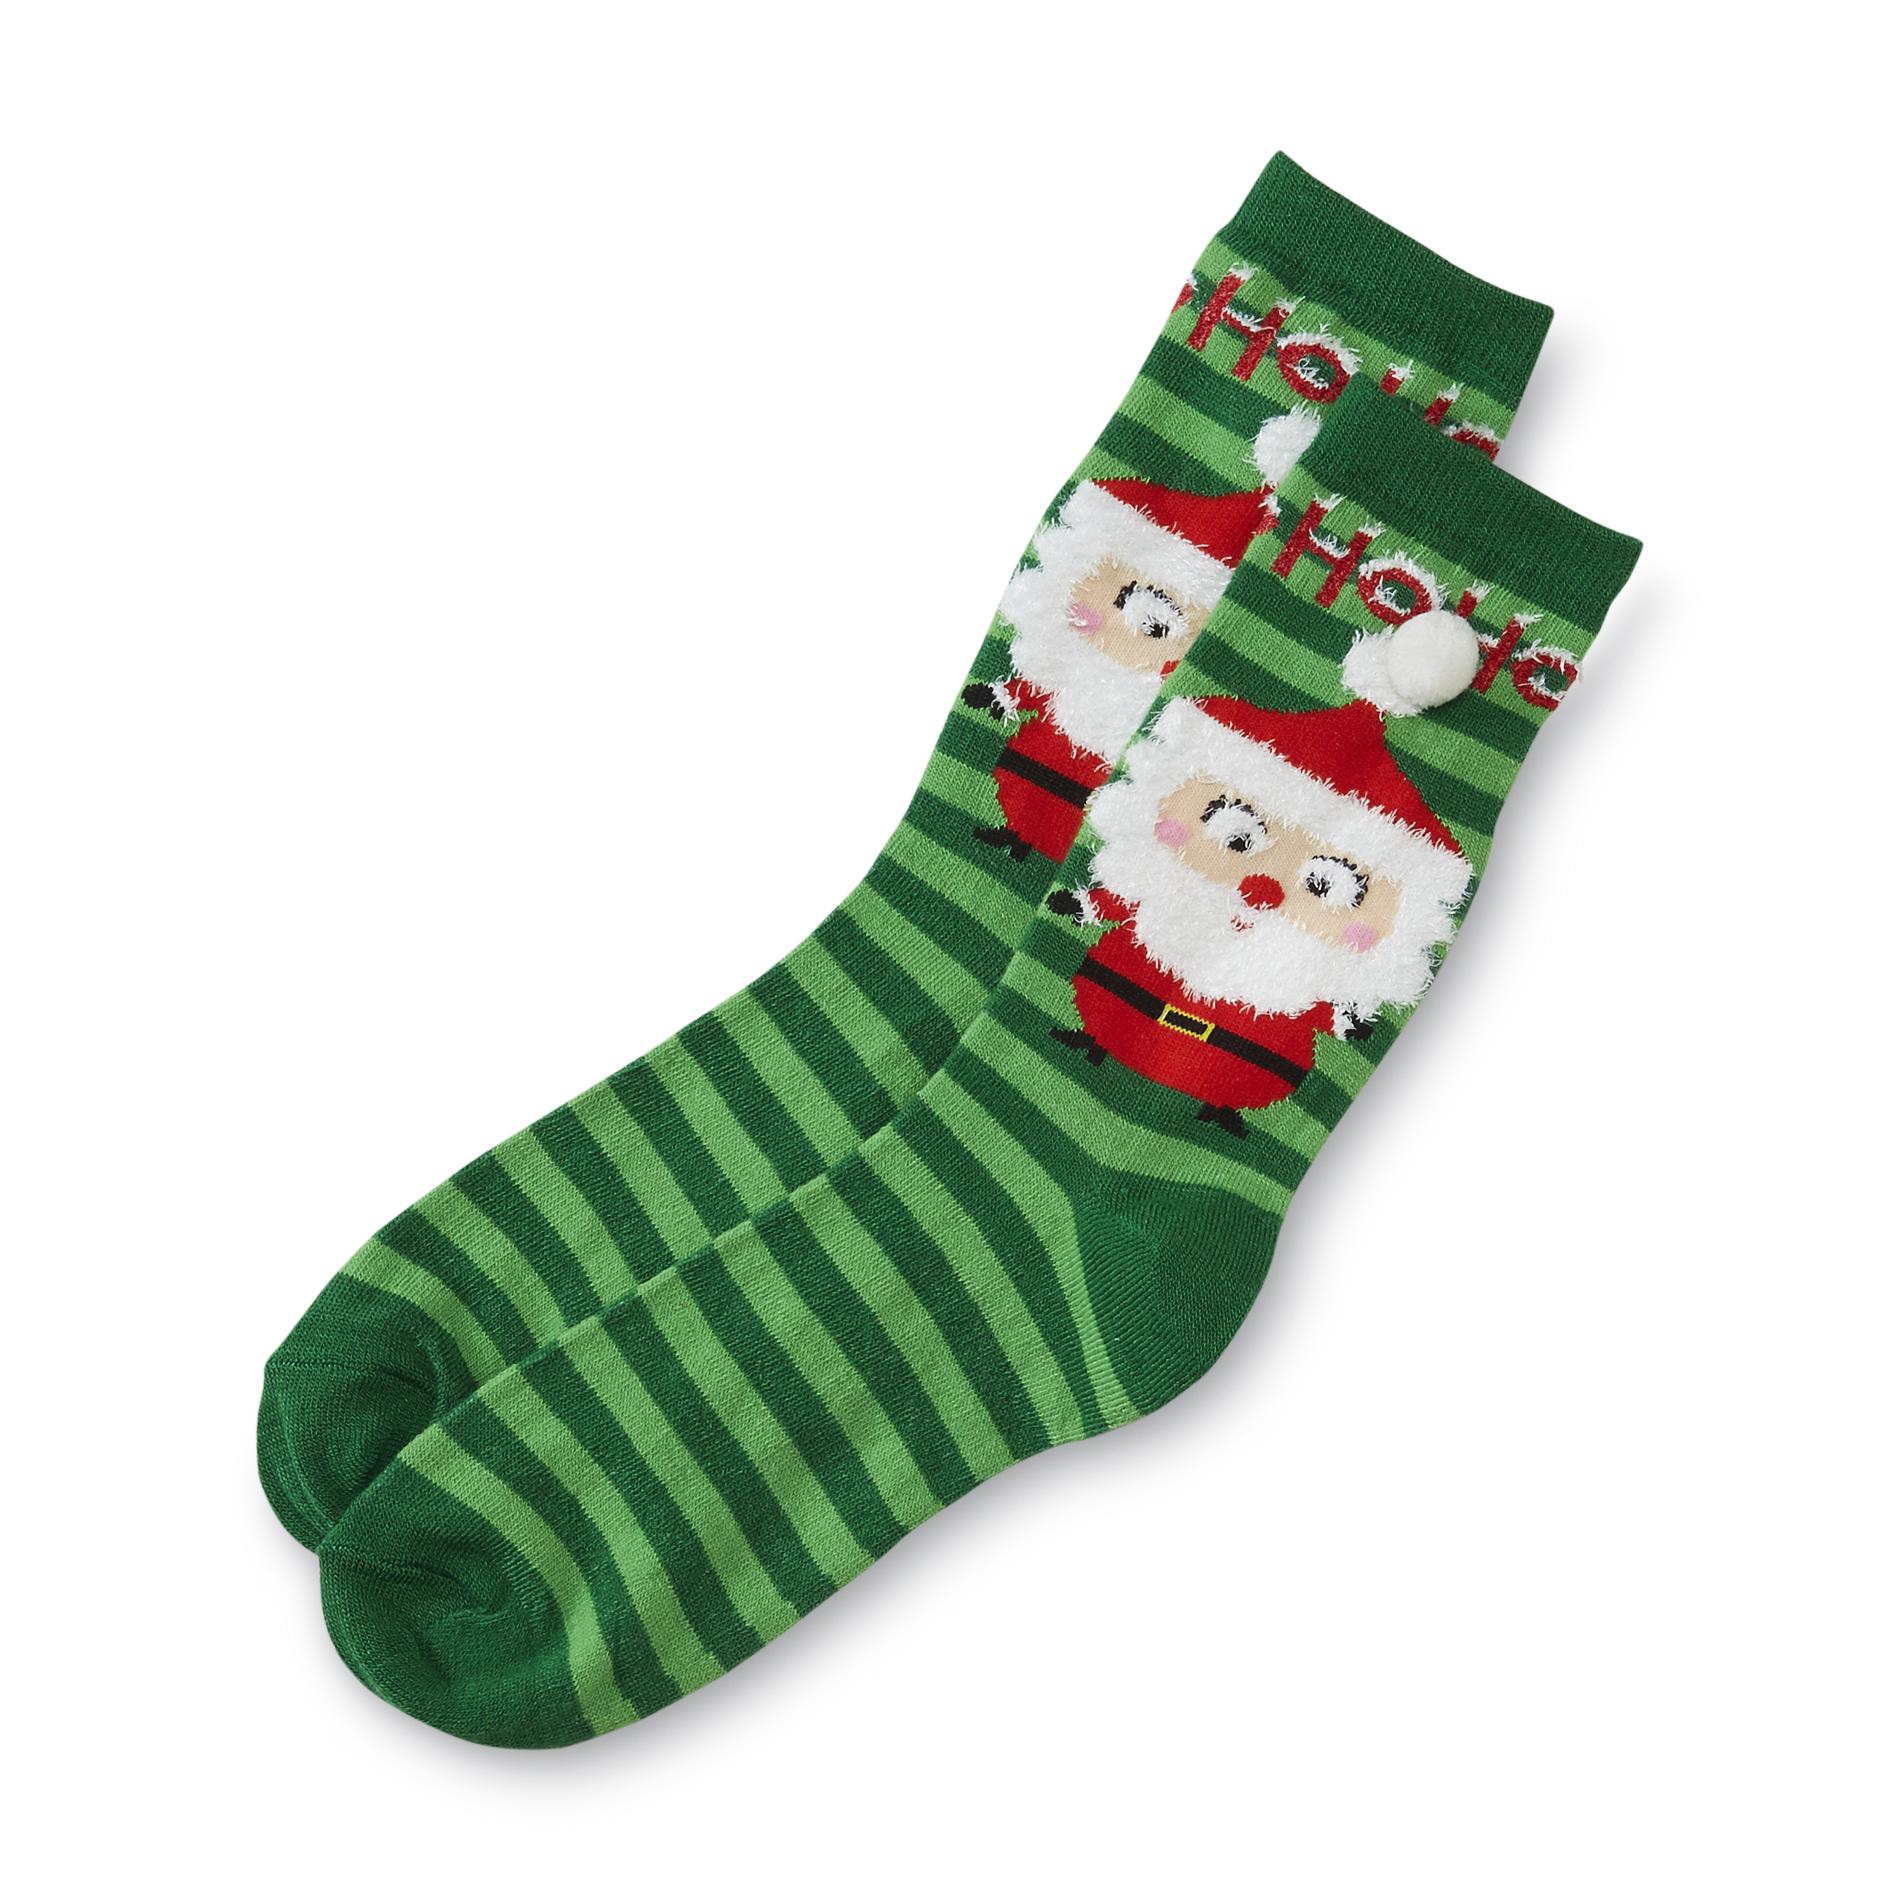 Joe Boxer Women's Christmas Crew Socks - Santa Claus